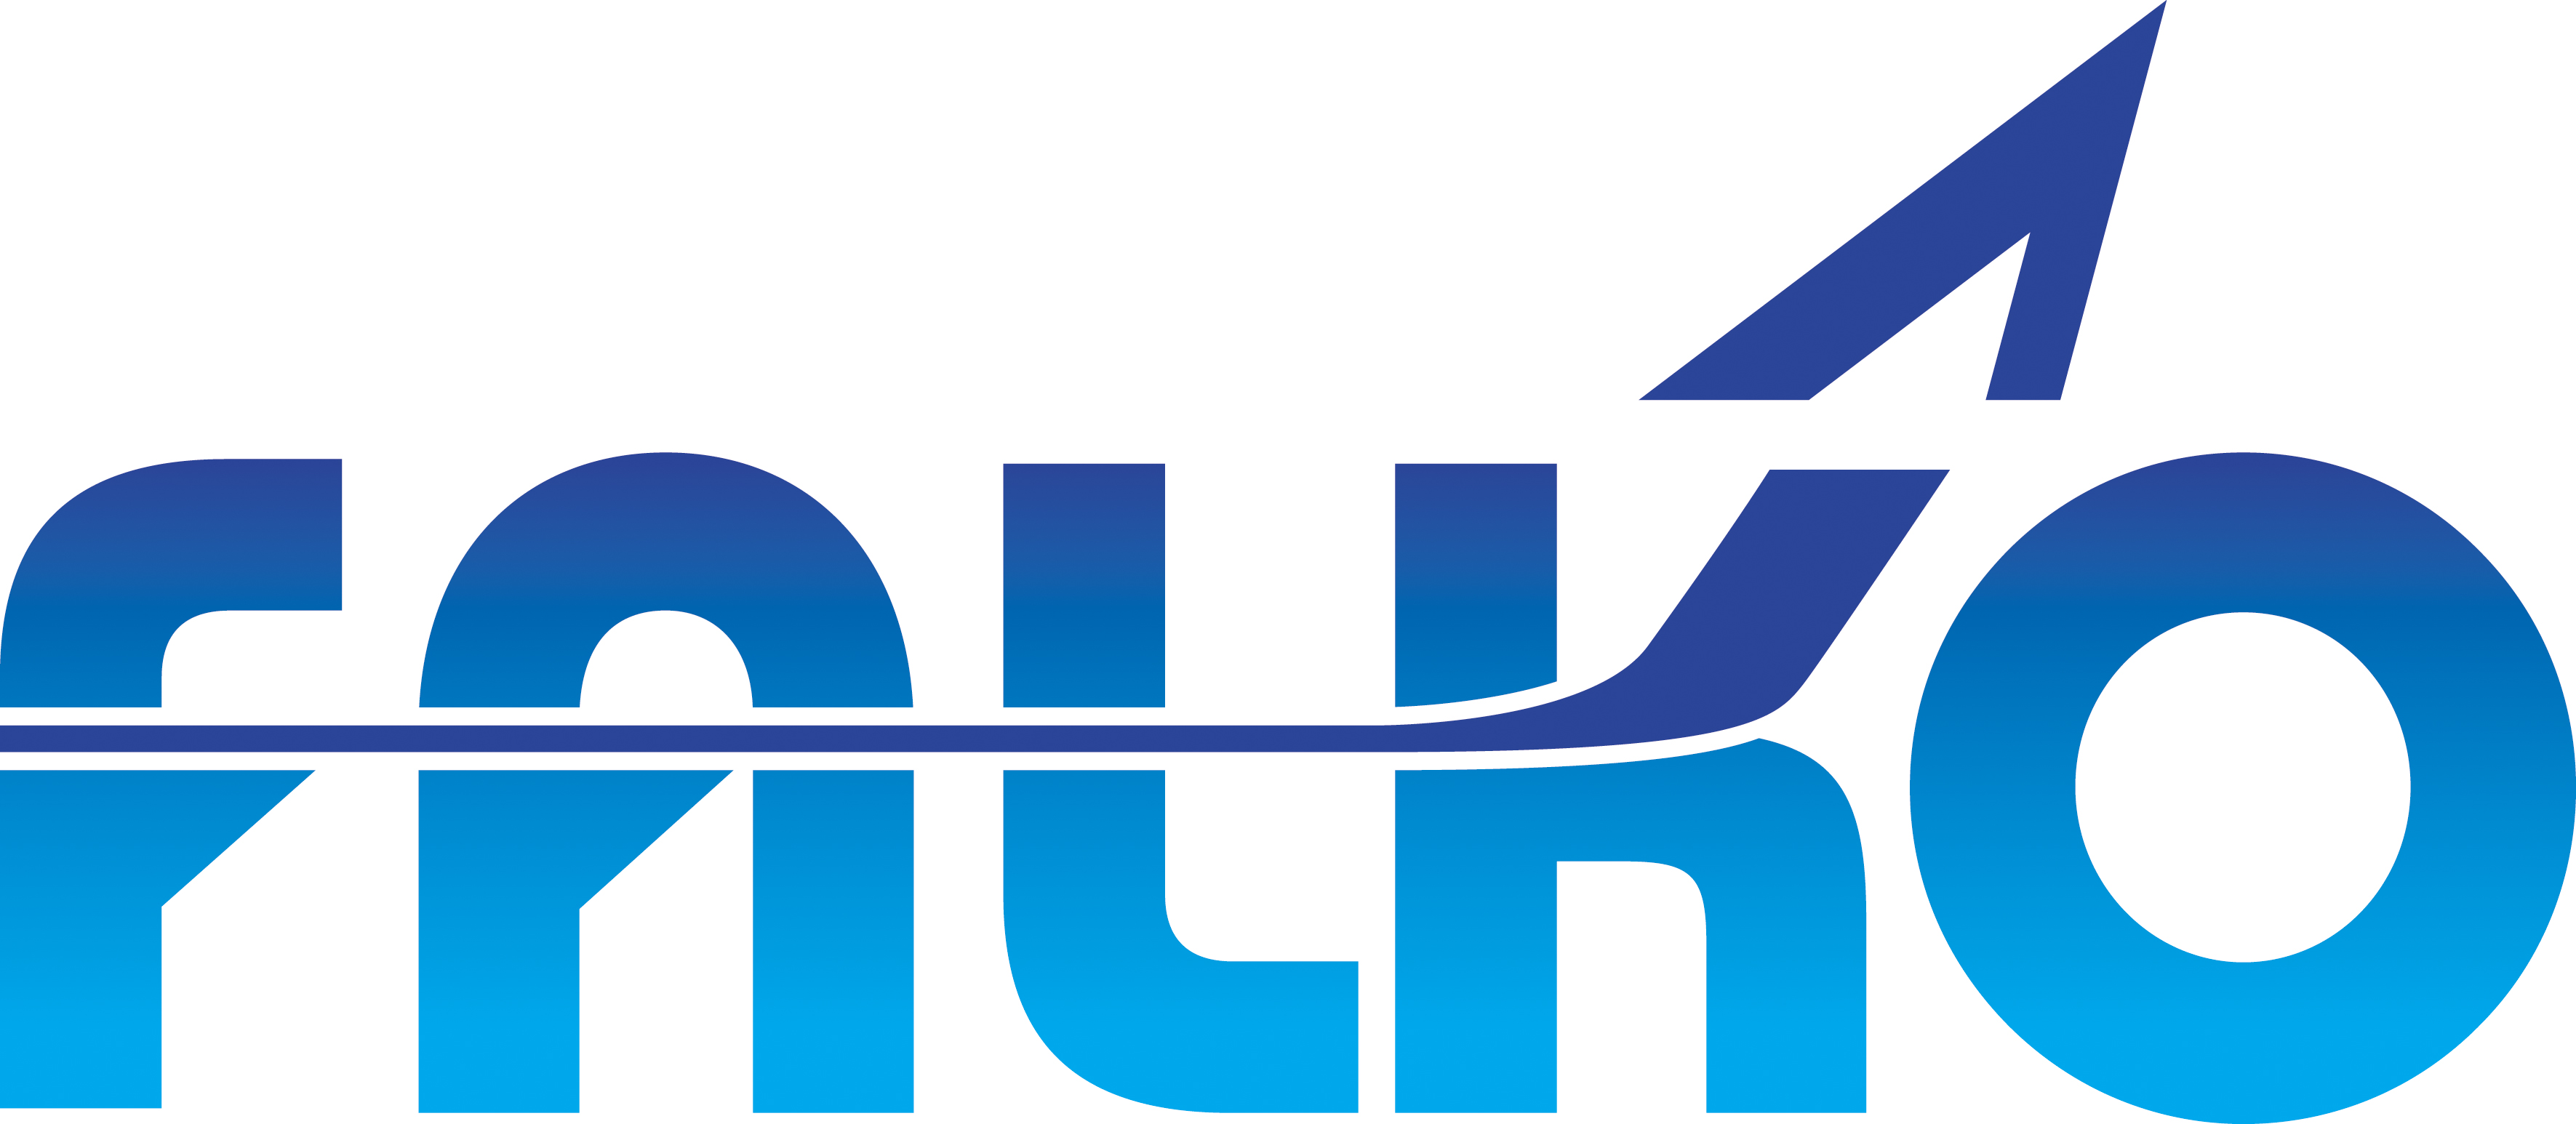 Falko logo